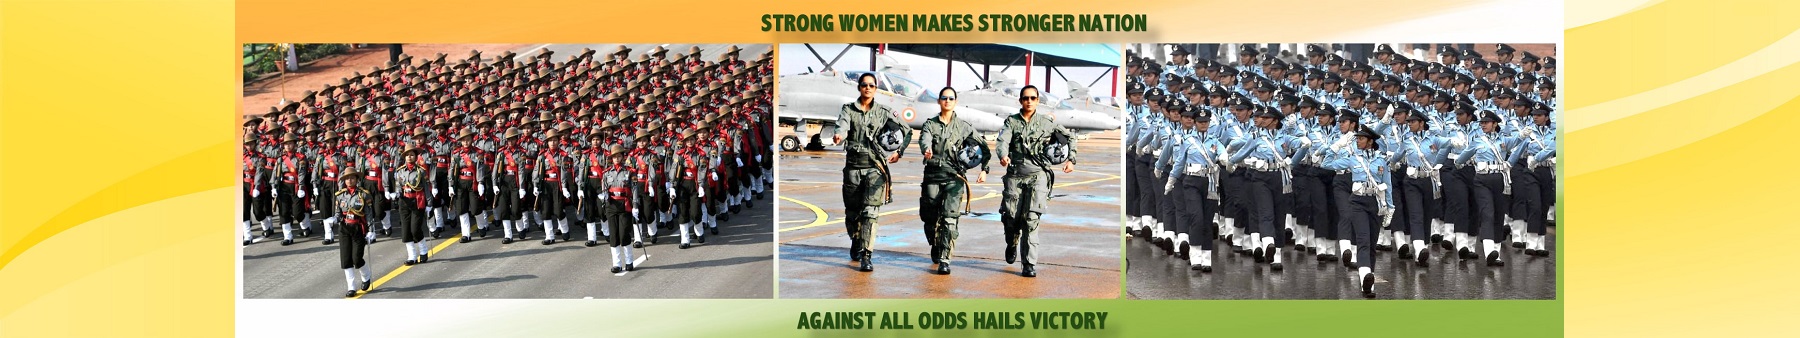 Strong Women Makes Stronger Nation